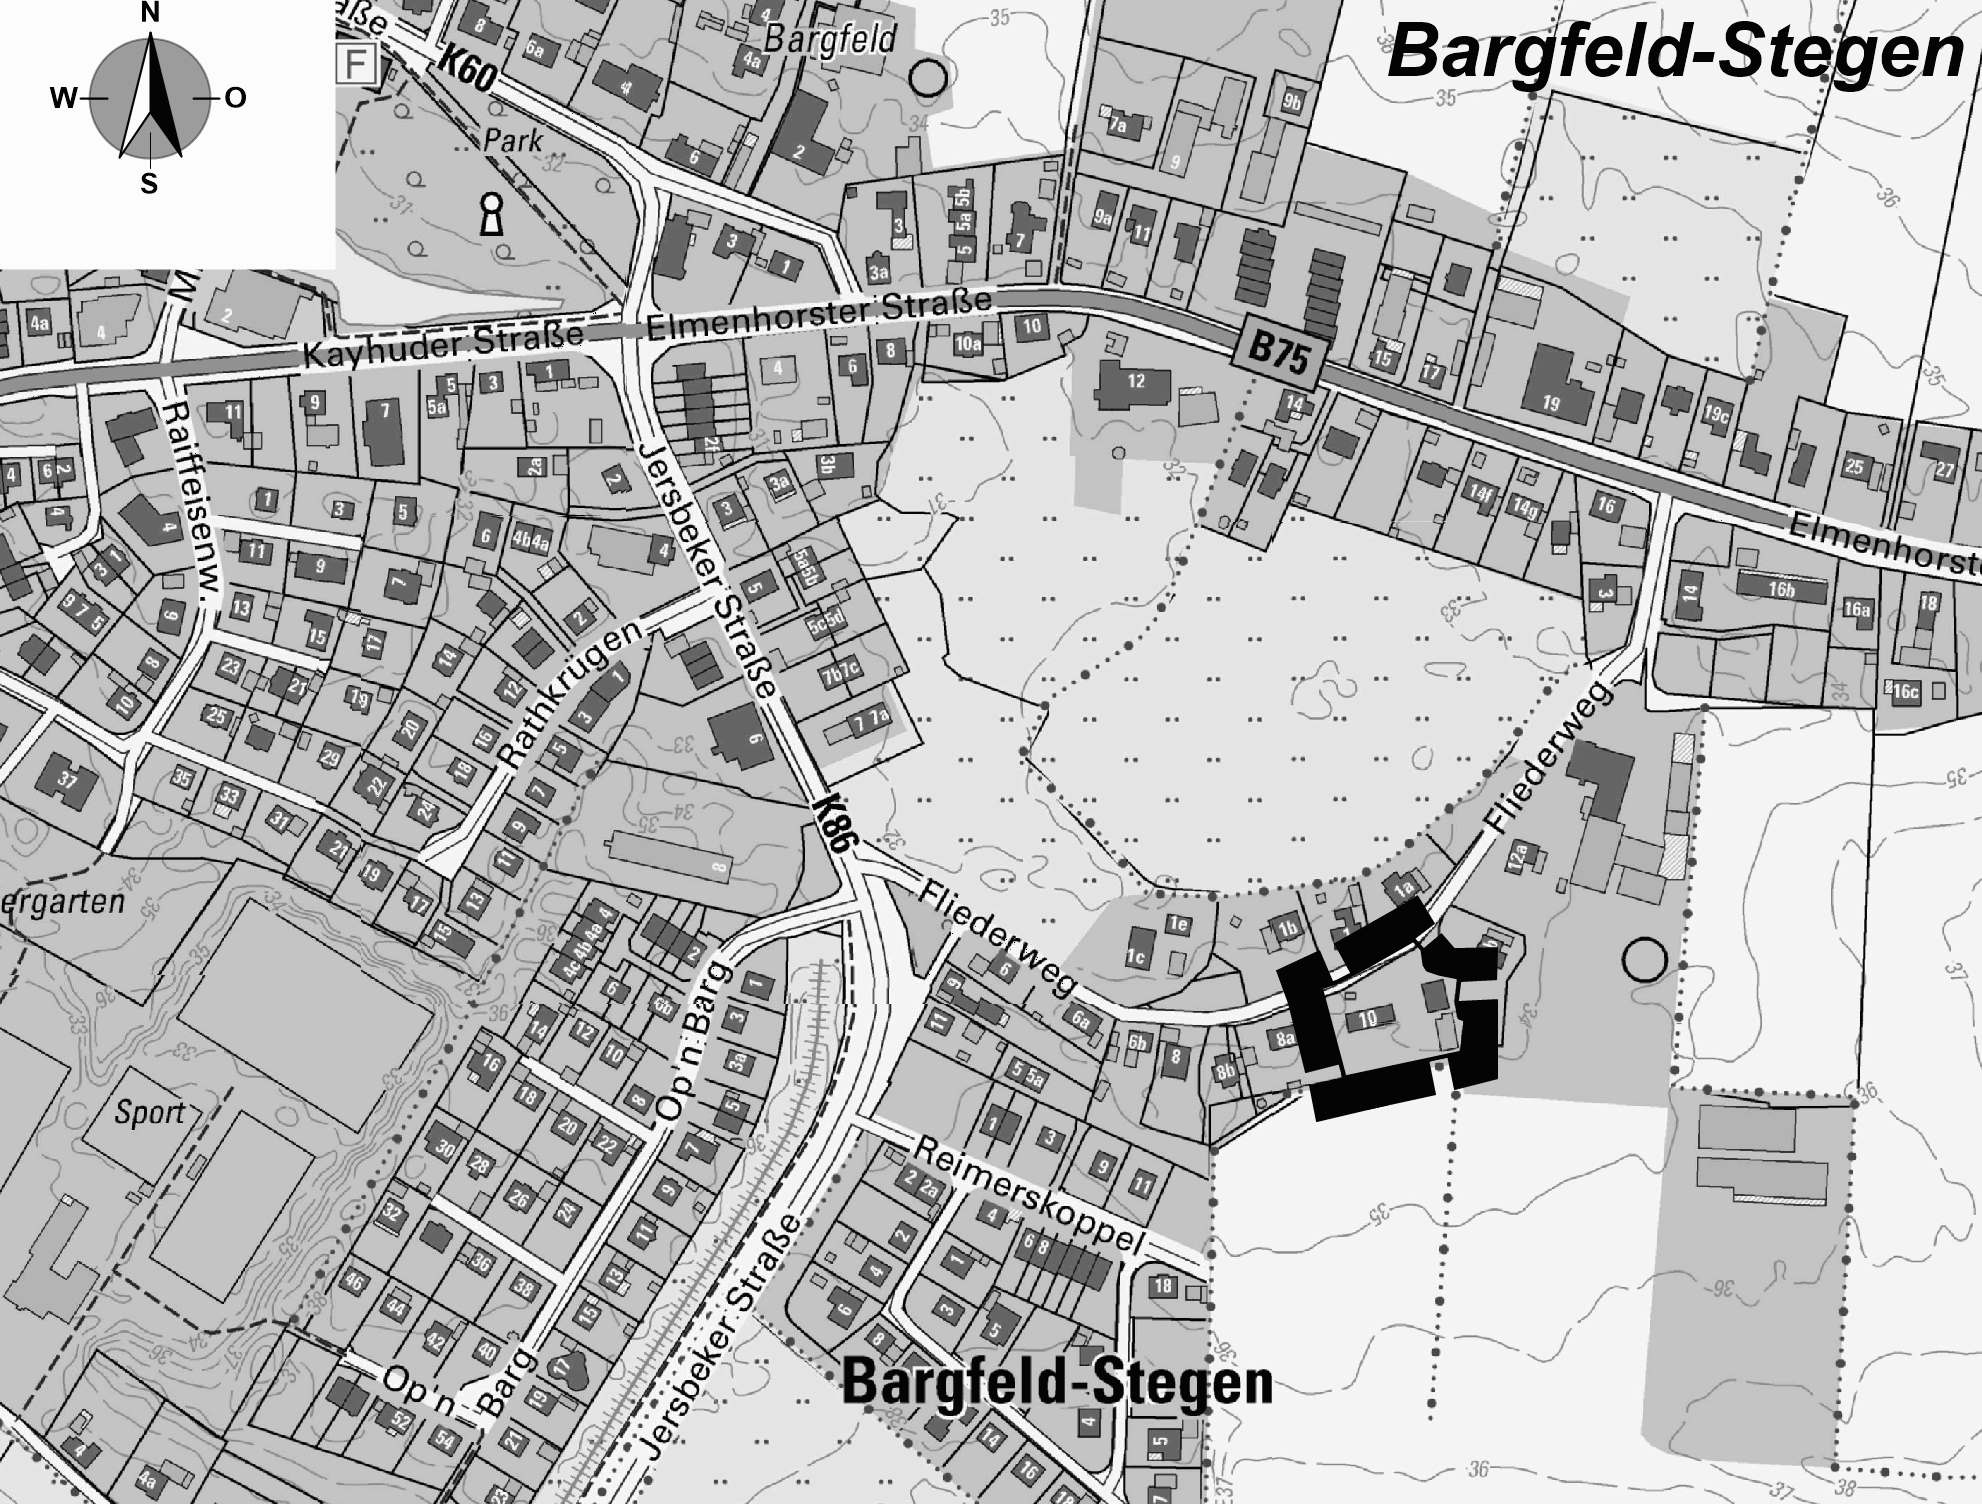 Bargfeld-Stegen: Plangebiet B-Plan Nr. 6, 3. Änderung